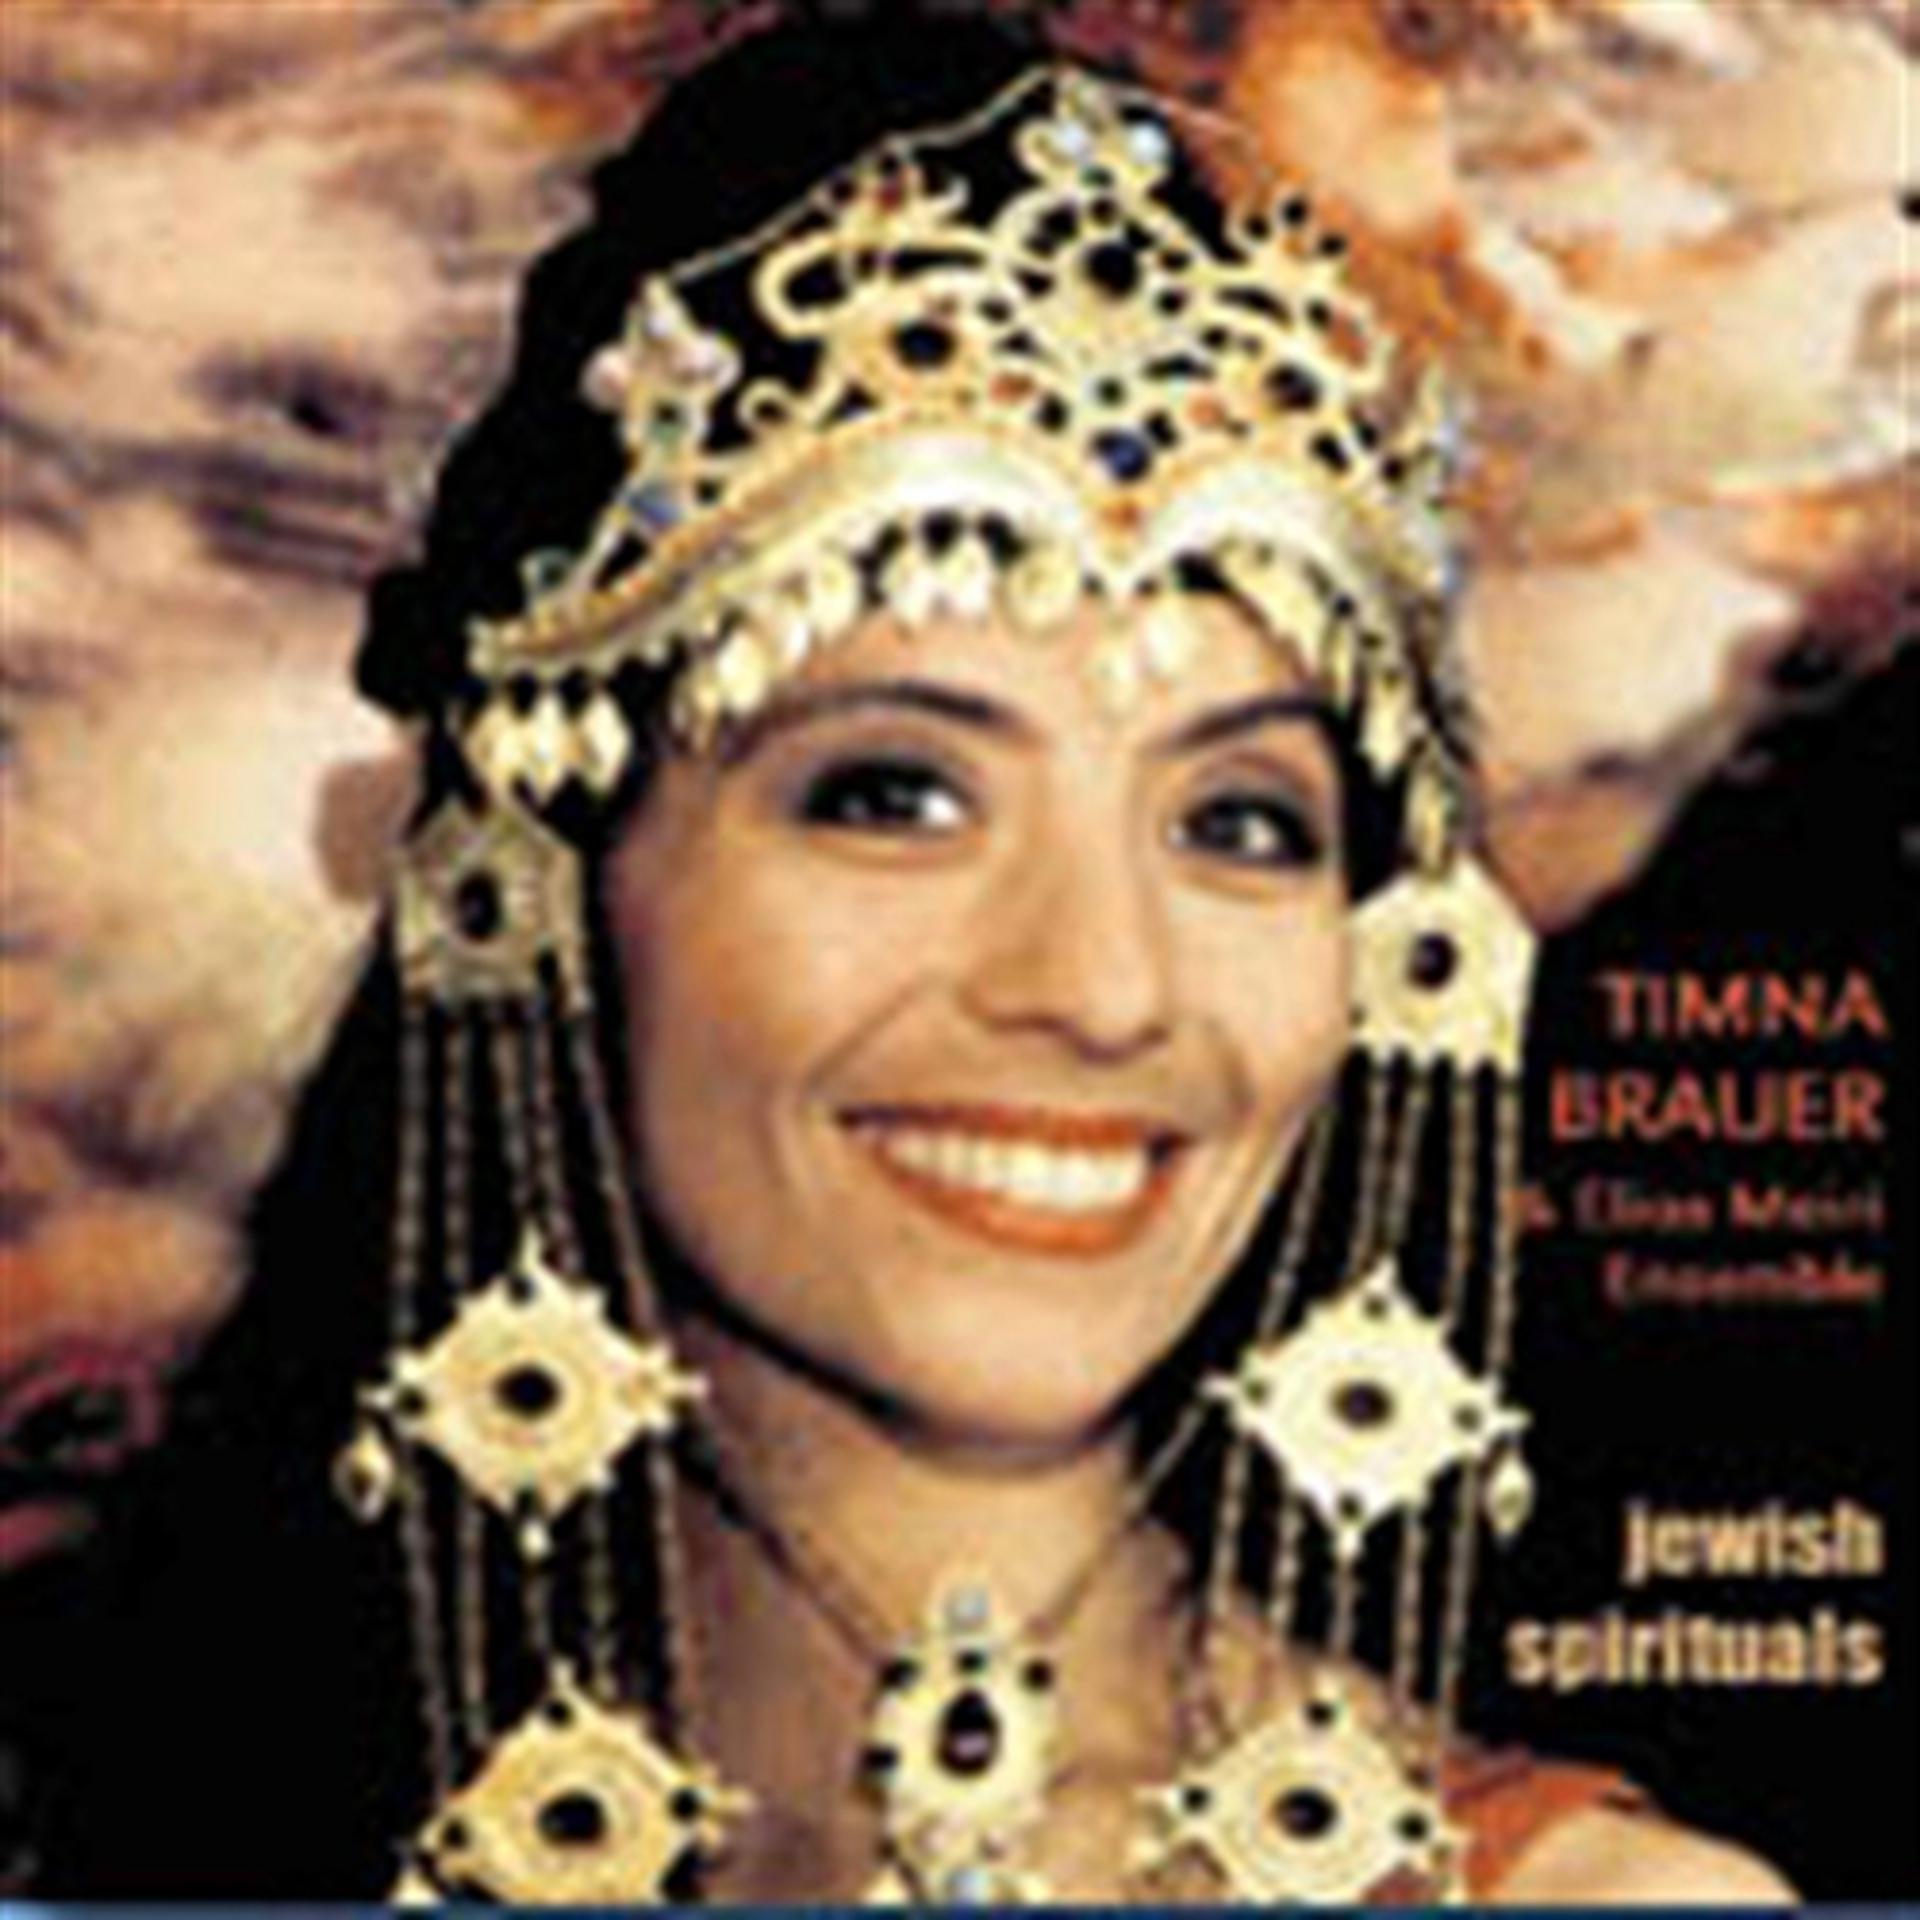 Постер альбома Jewish Spirituals